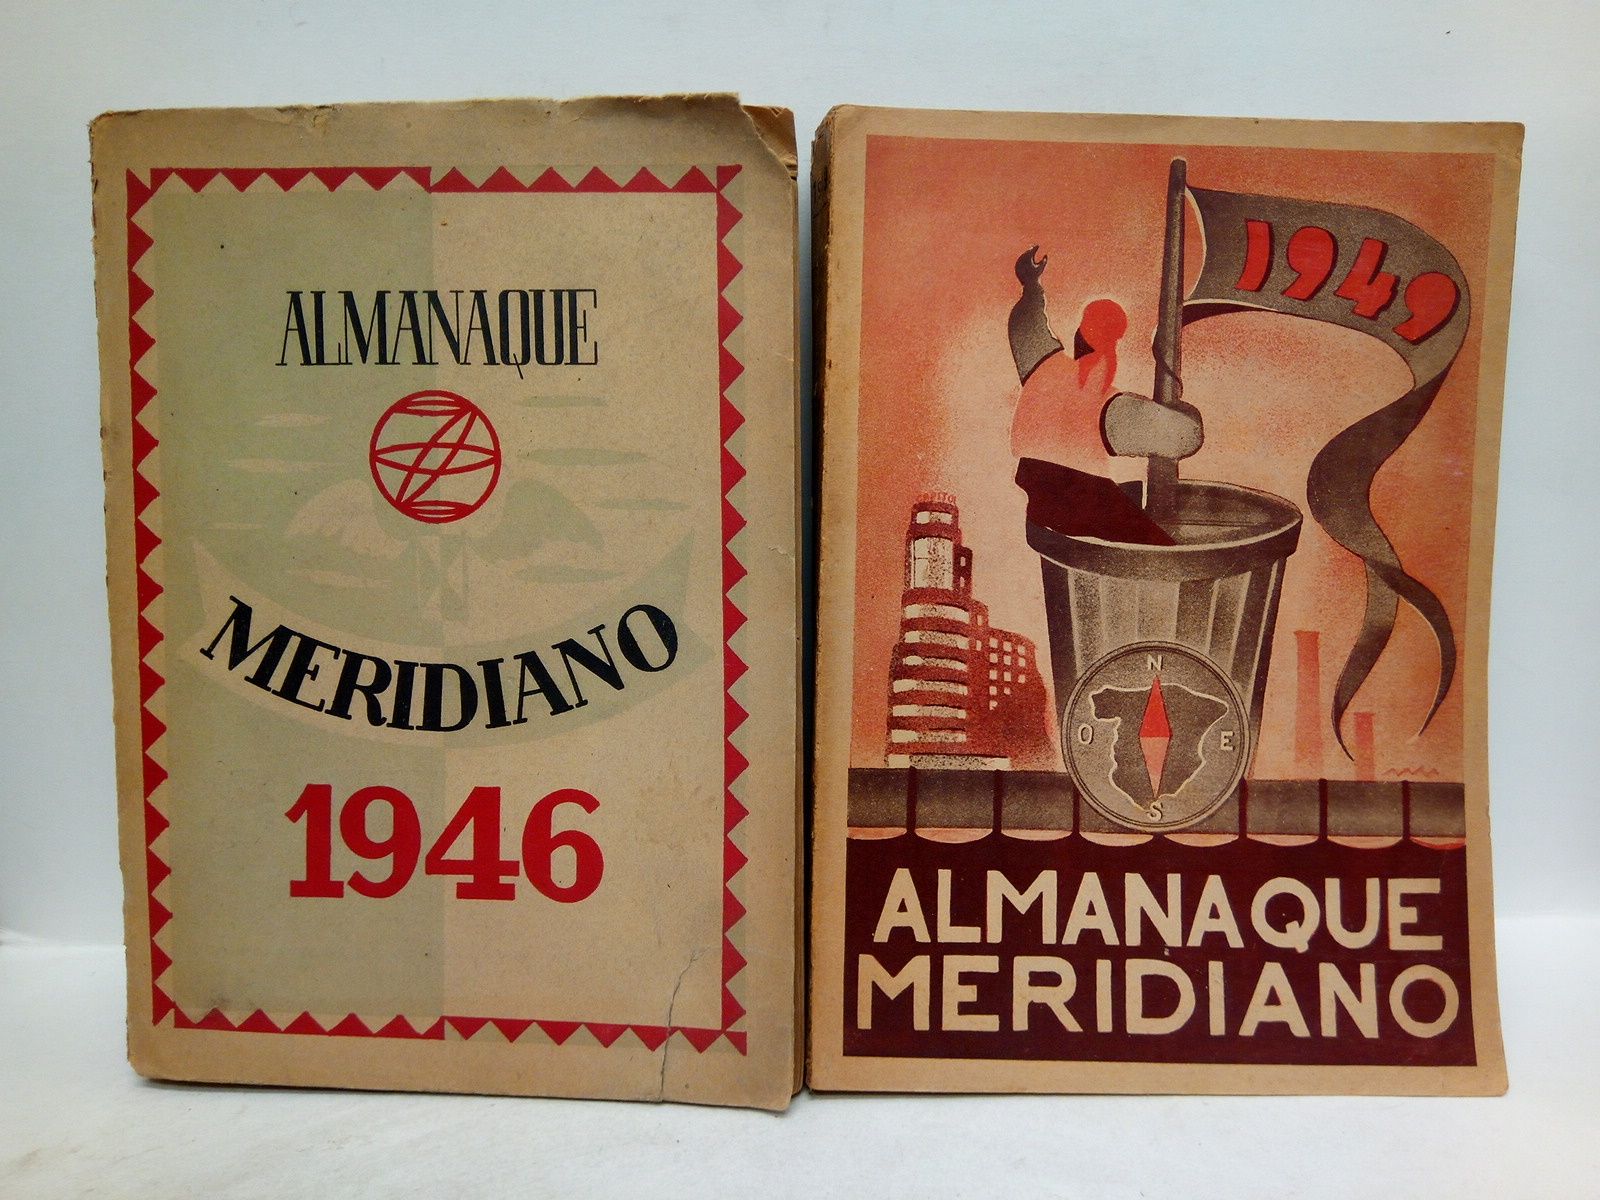 ALMANAQUE MERIDIANO - Almanaque de Meridiano. Director: Manuel Jimnez Qulez, Subdirector: Benjamn Bentura